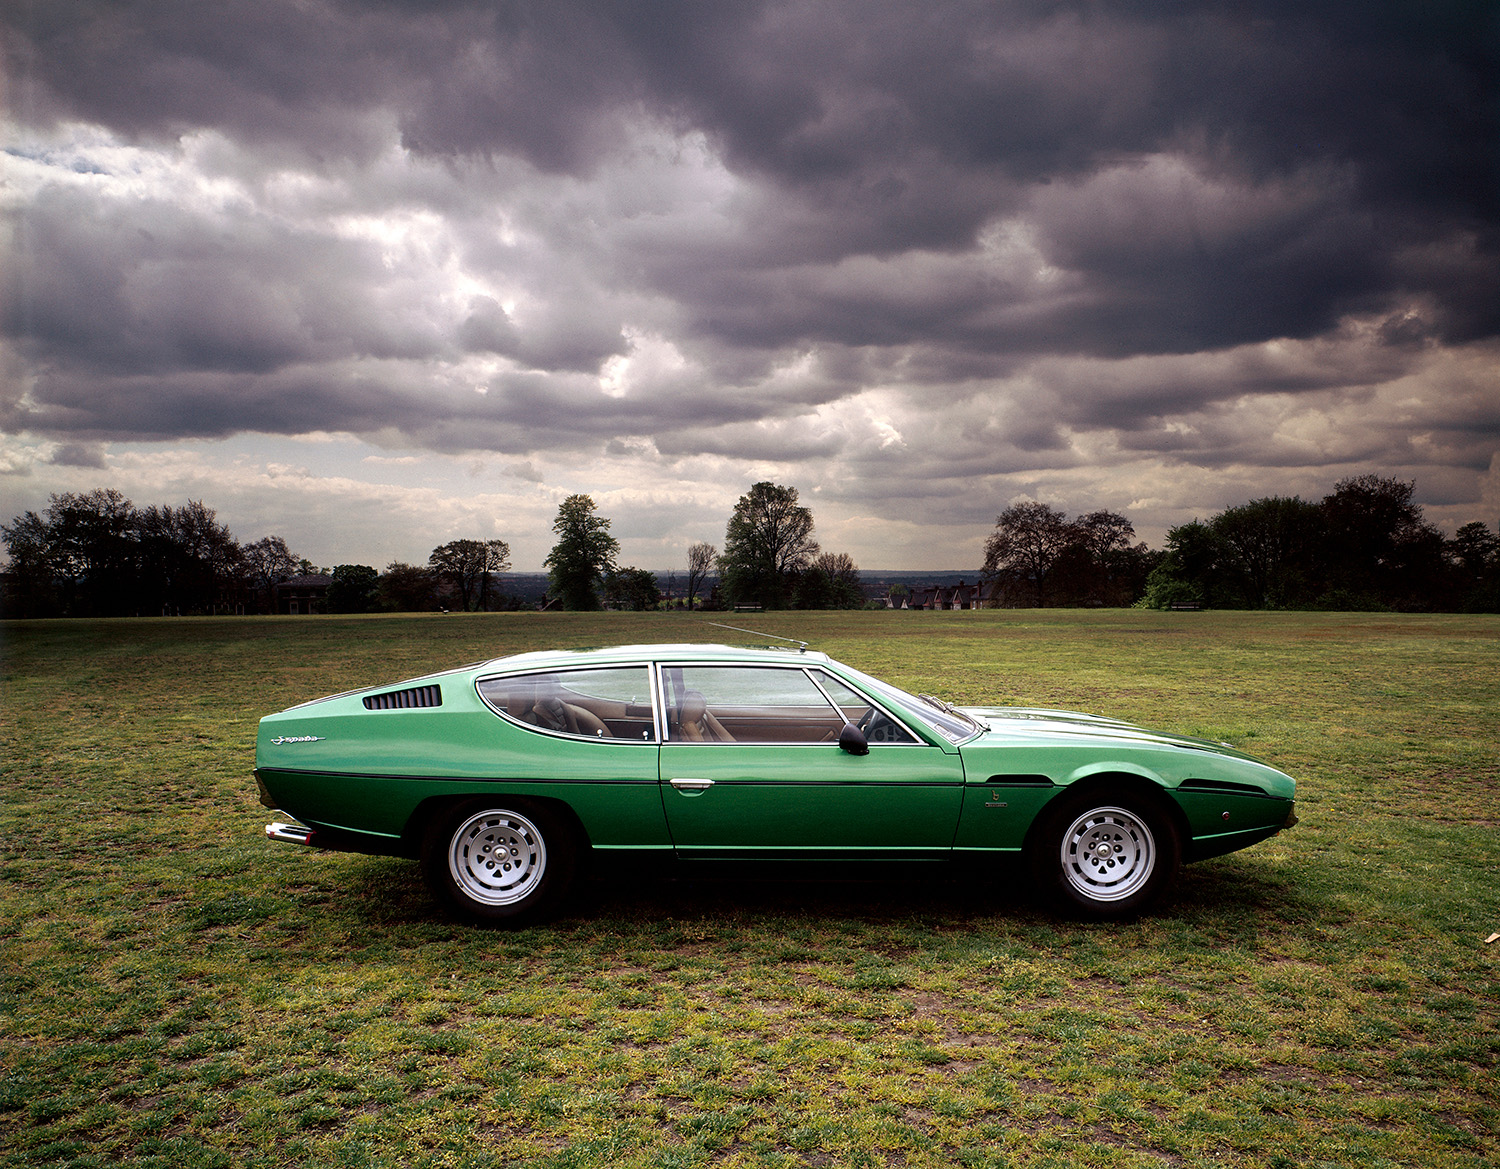 Green 1970 Lamborghini Espada Series II Classic Model sitting in grass field during cloudy day